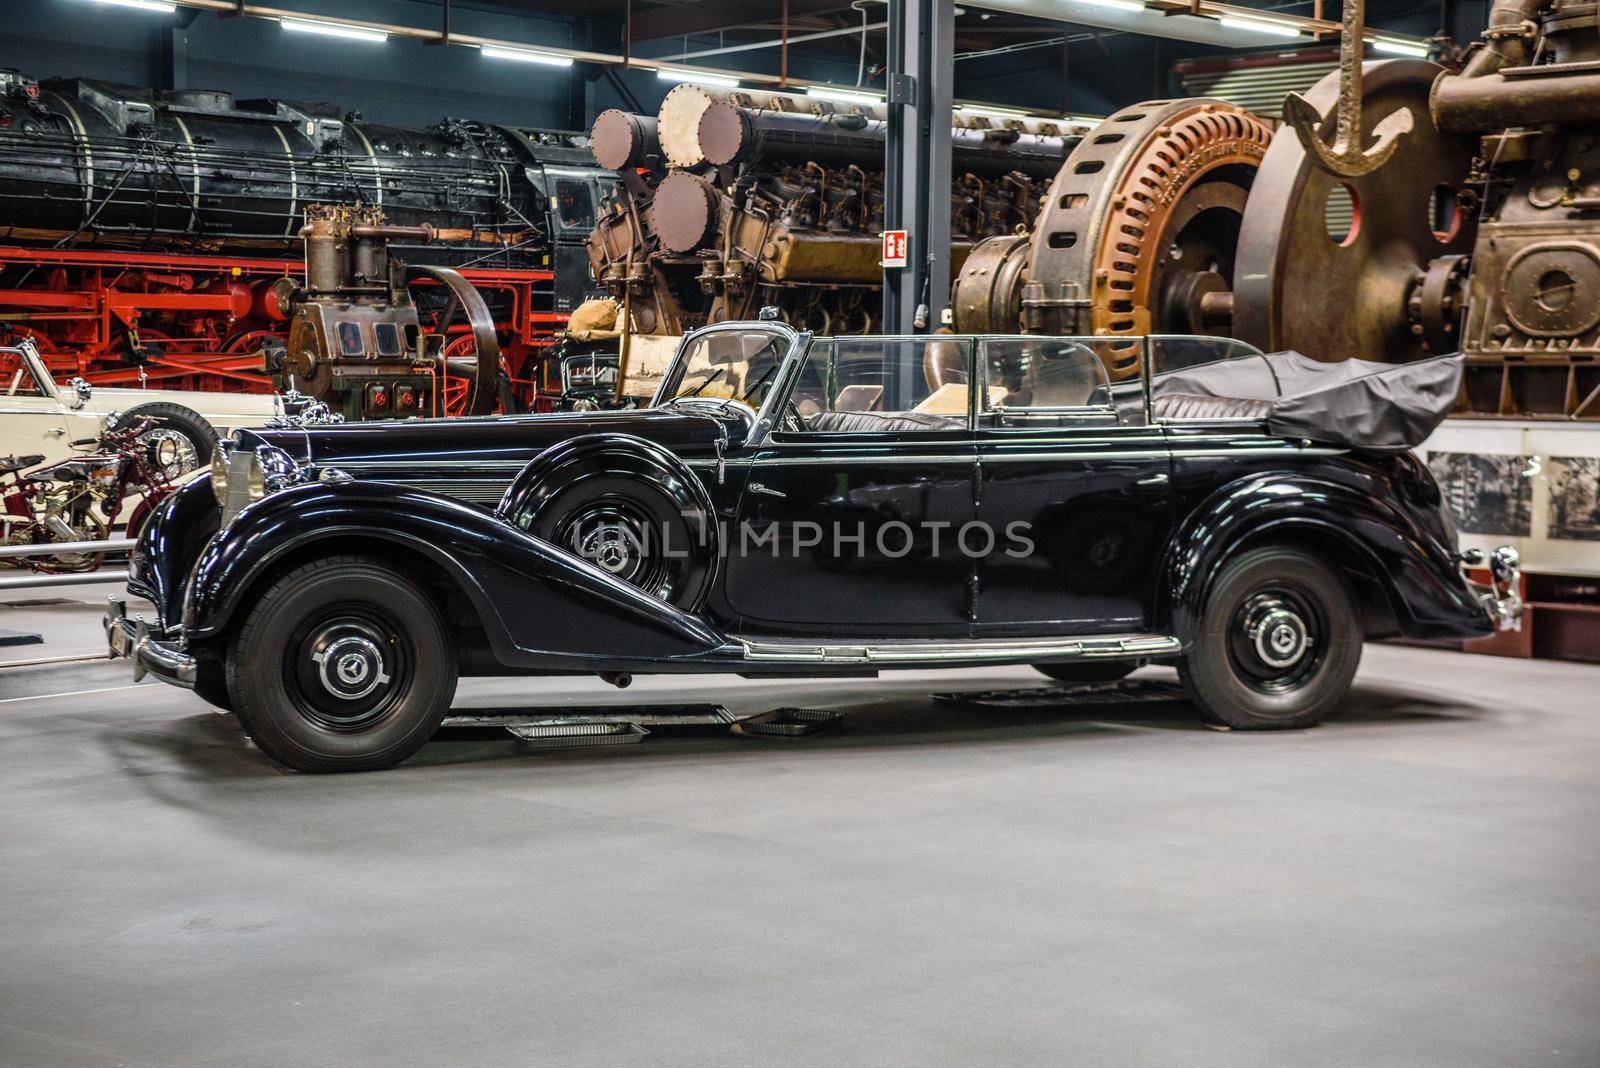 SINSHEIM, GERMANY - MAI 2022: silver black Mercedes Benz G 4 1938 110ps